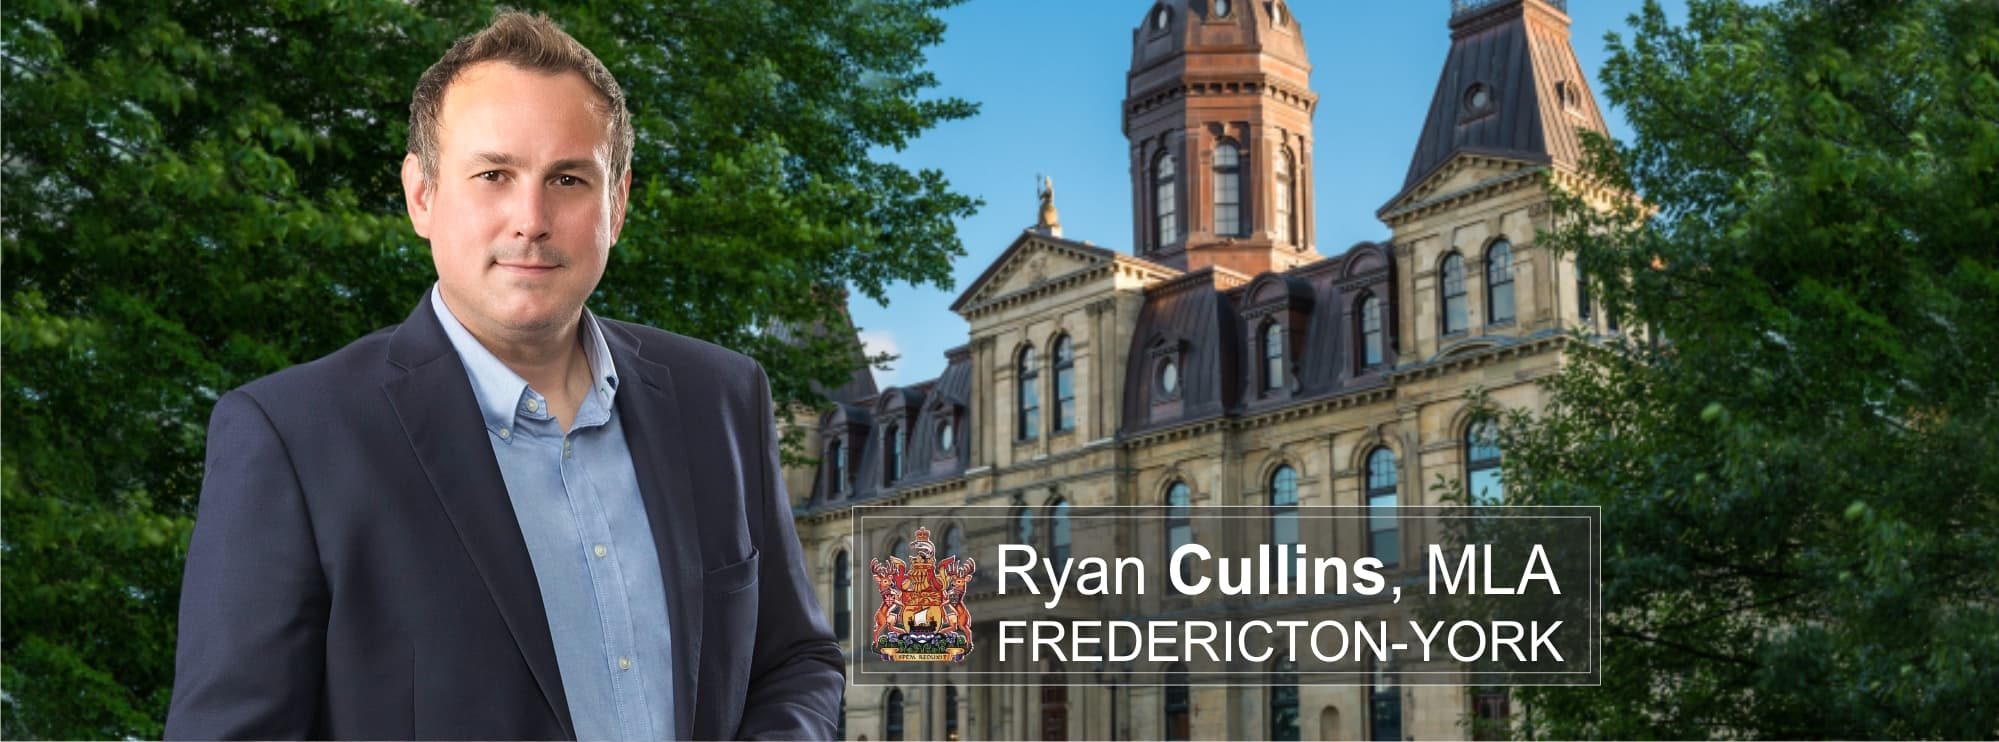 Ryan Cullins MLA Fredericton-York